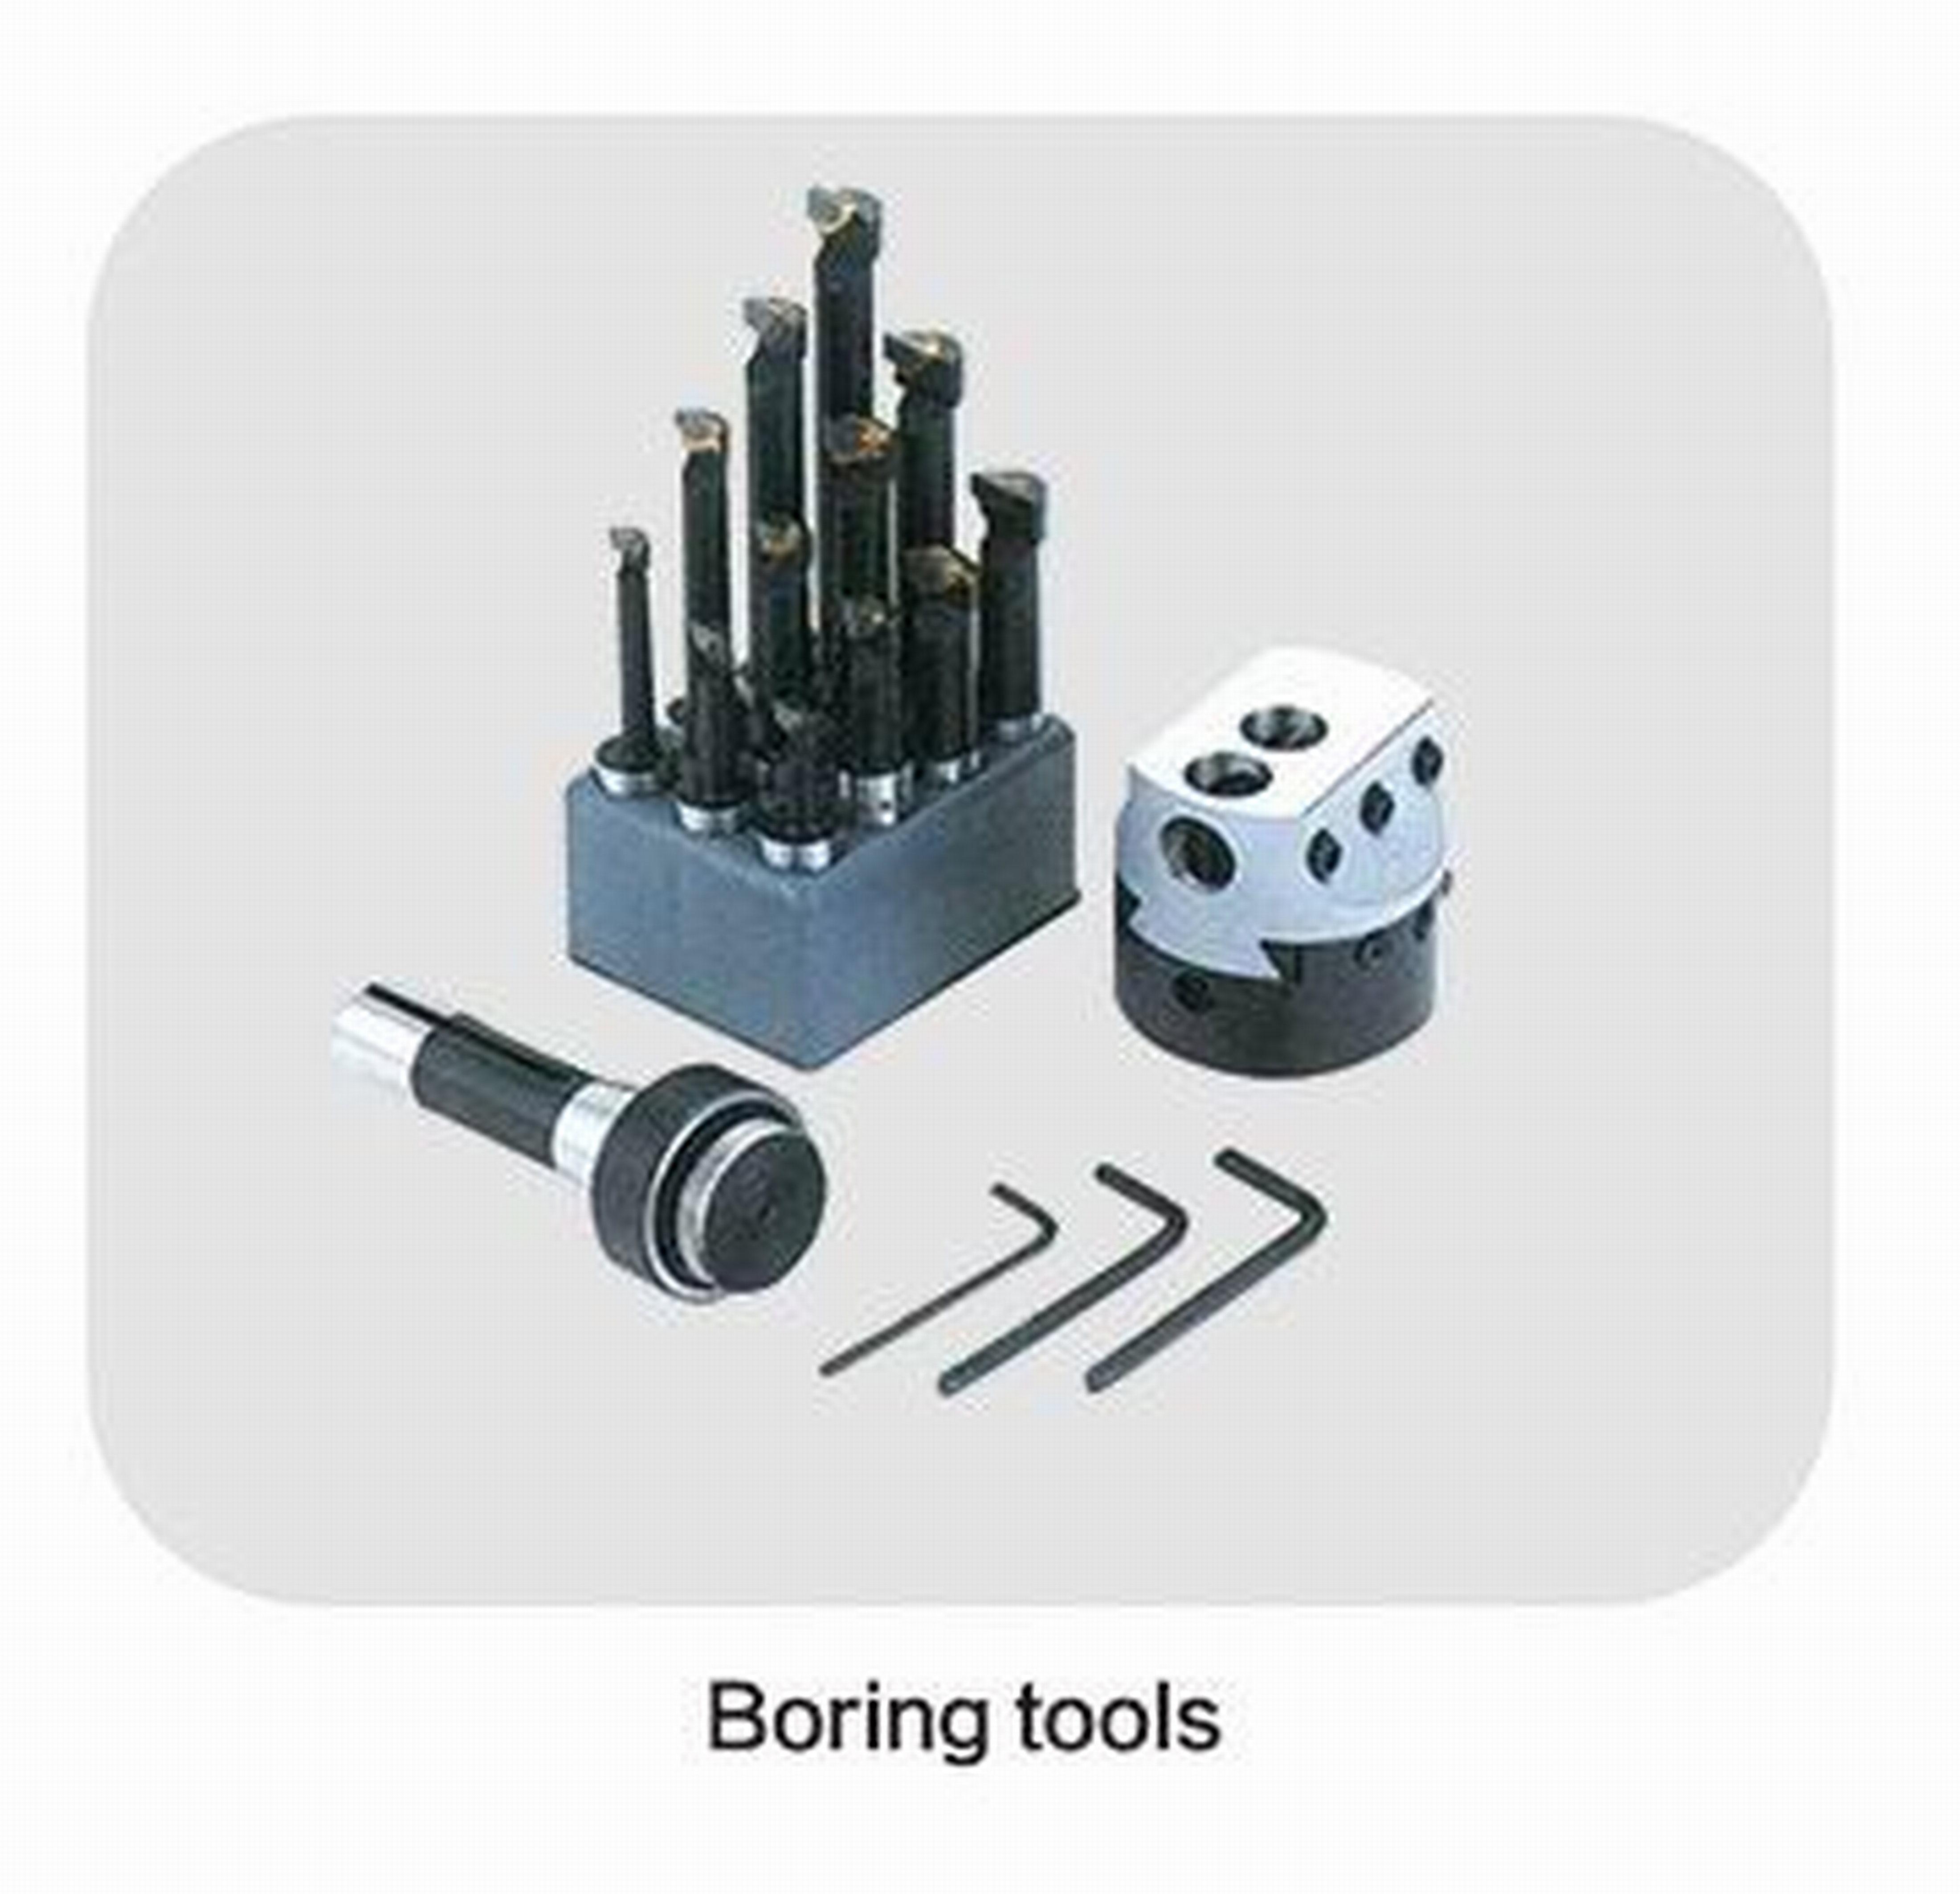 Boring tools 